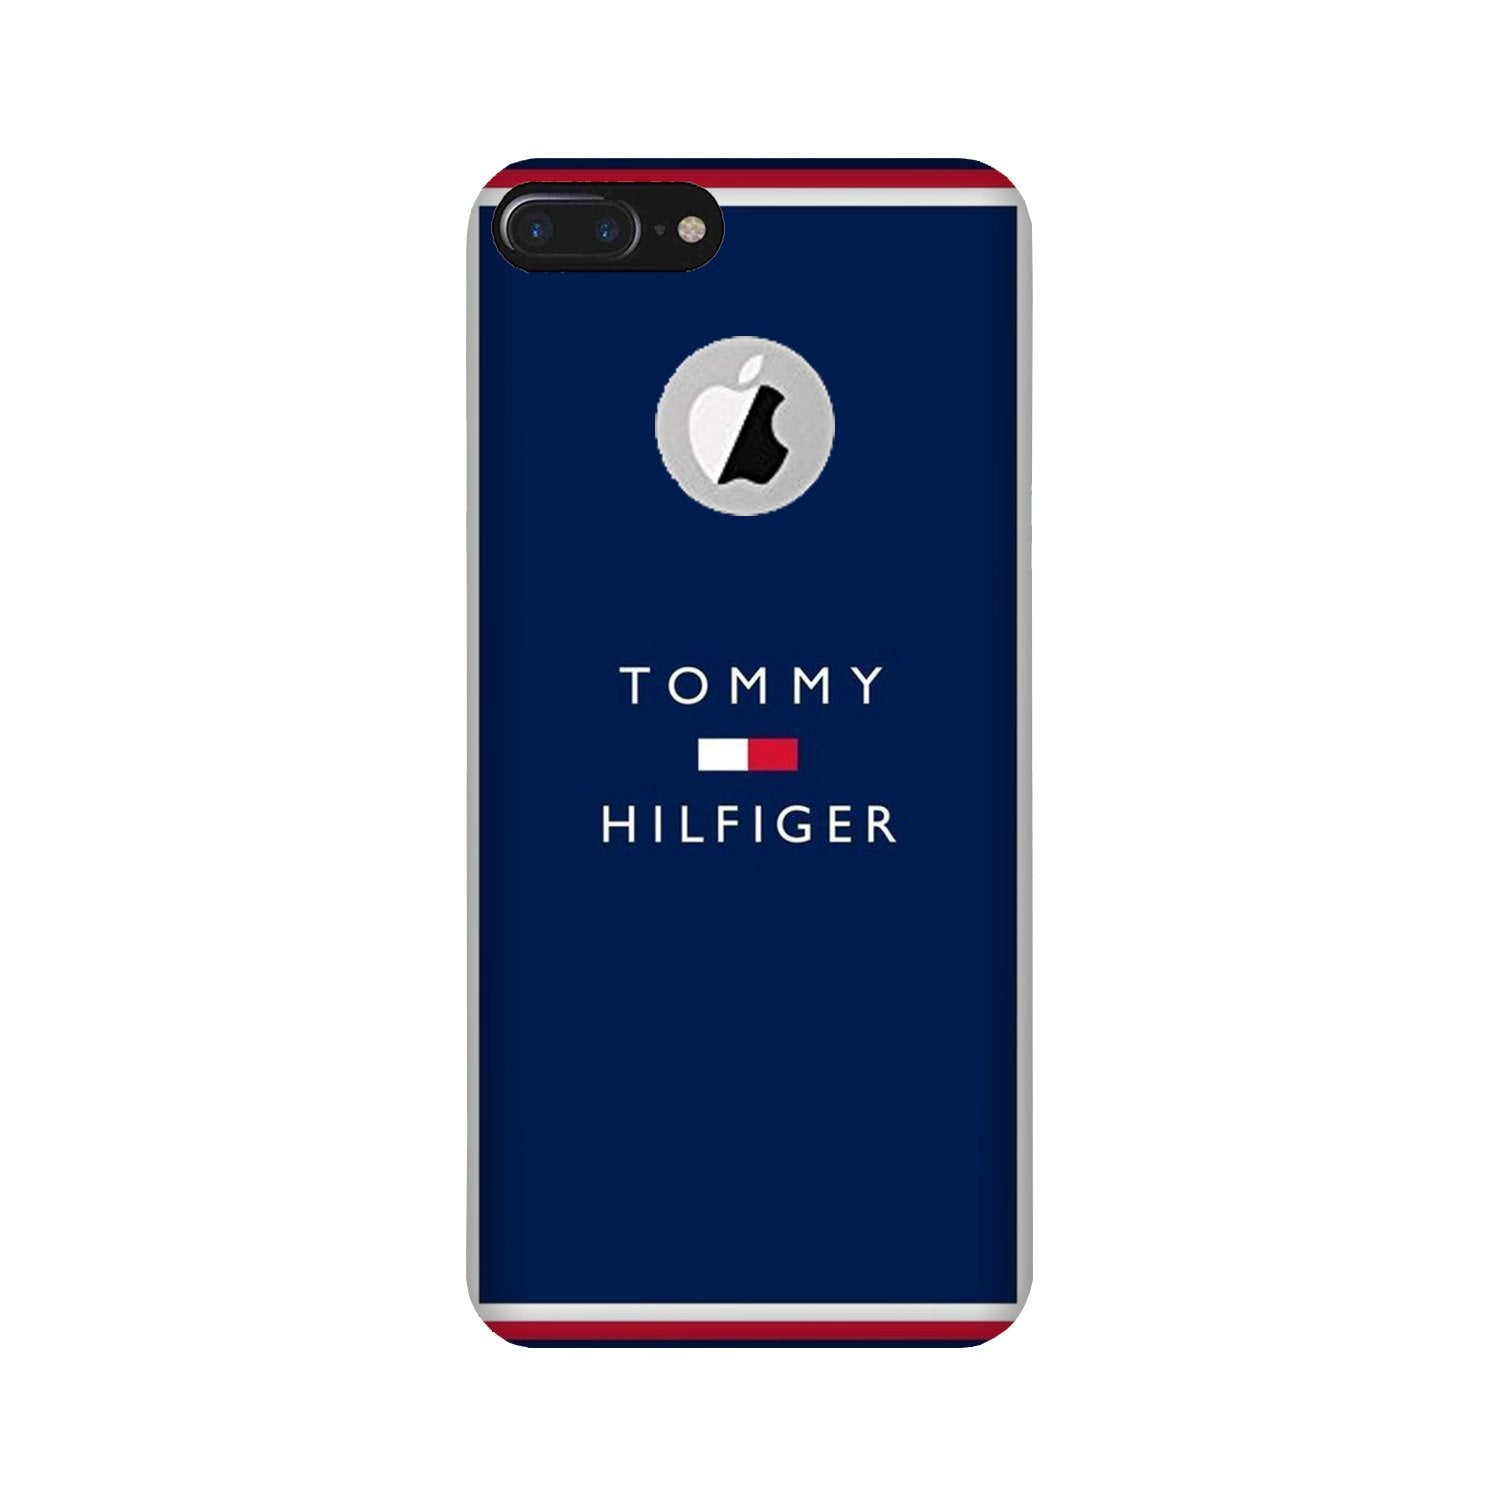 Tommy Hilfiger Case for iPhone 7 Plus logo cut (Design No. 275)